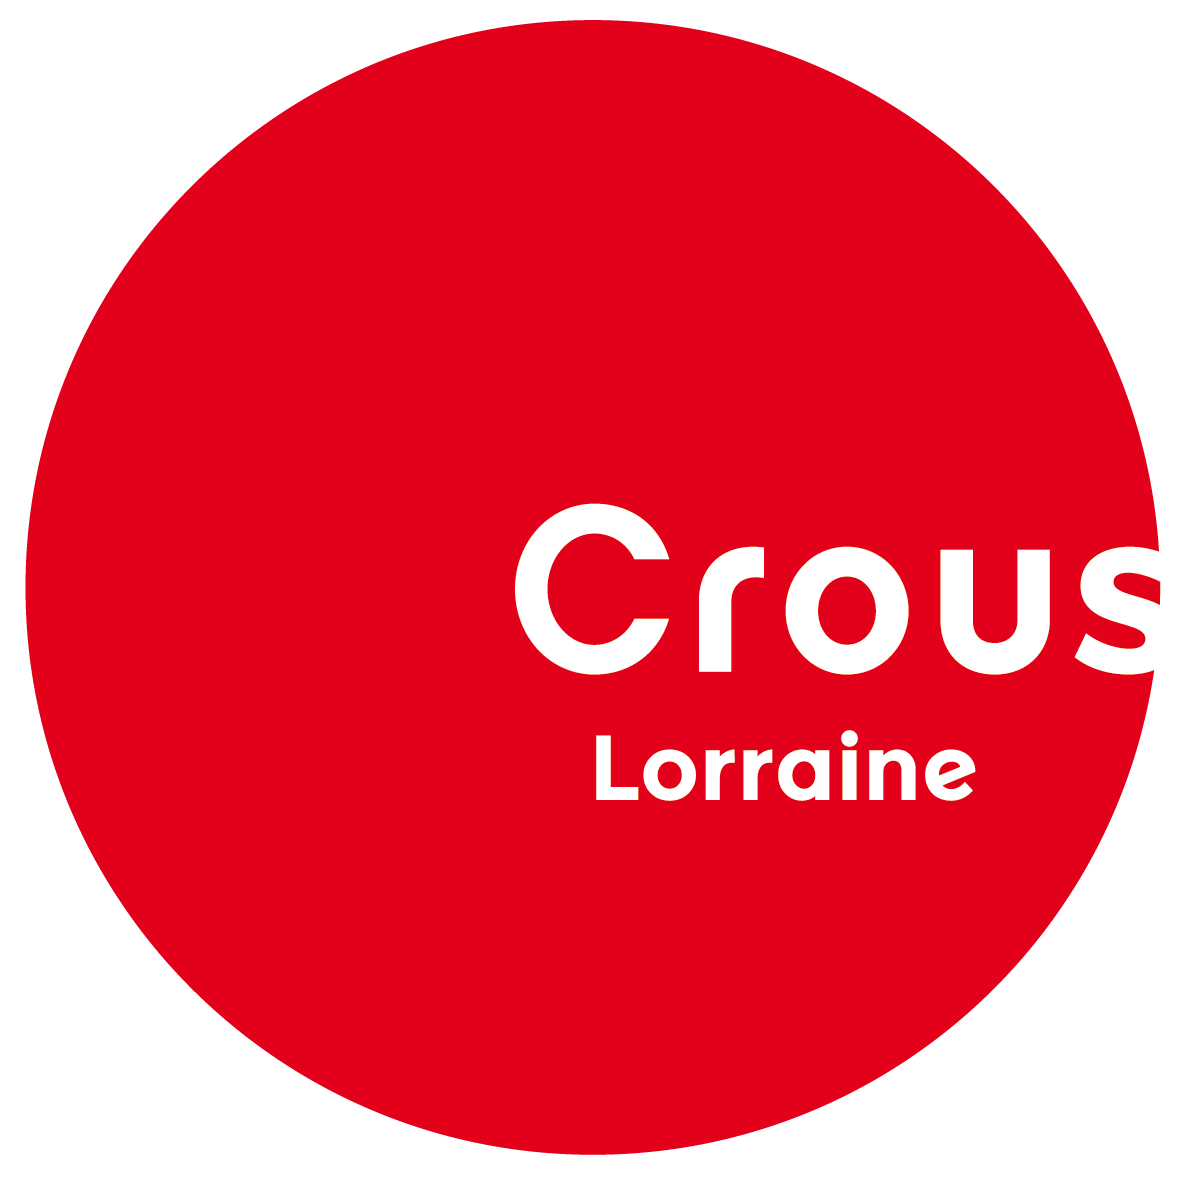 Crous-logo-lorraine-fond-transparent